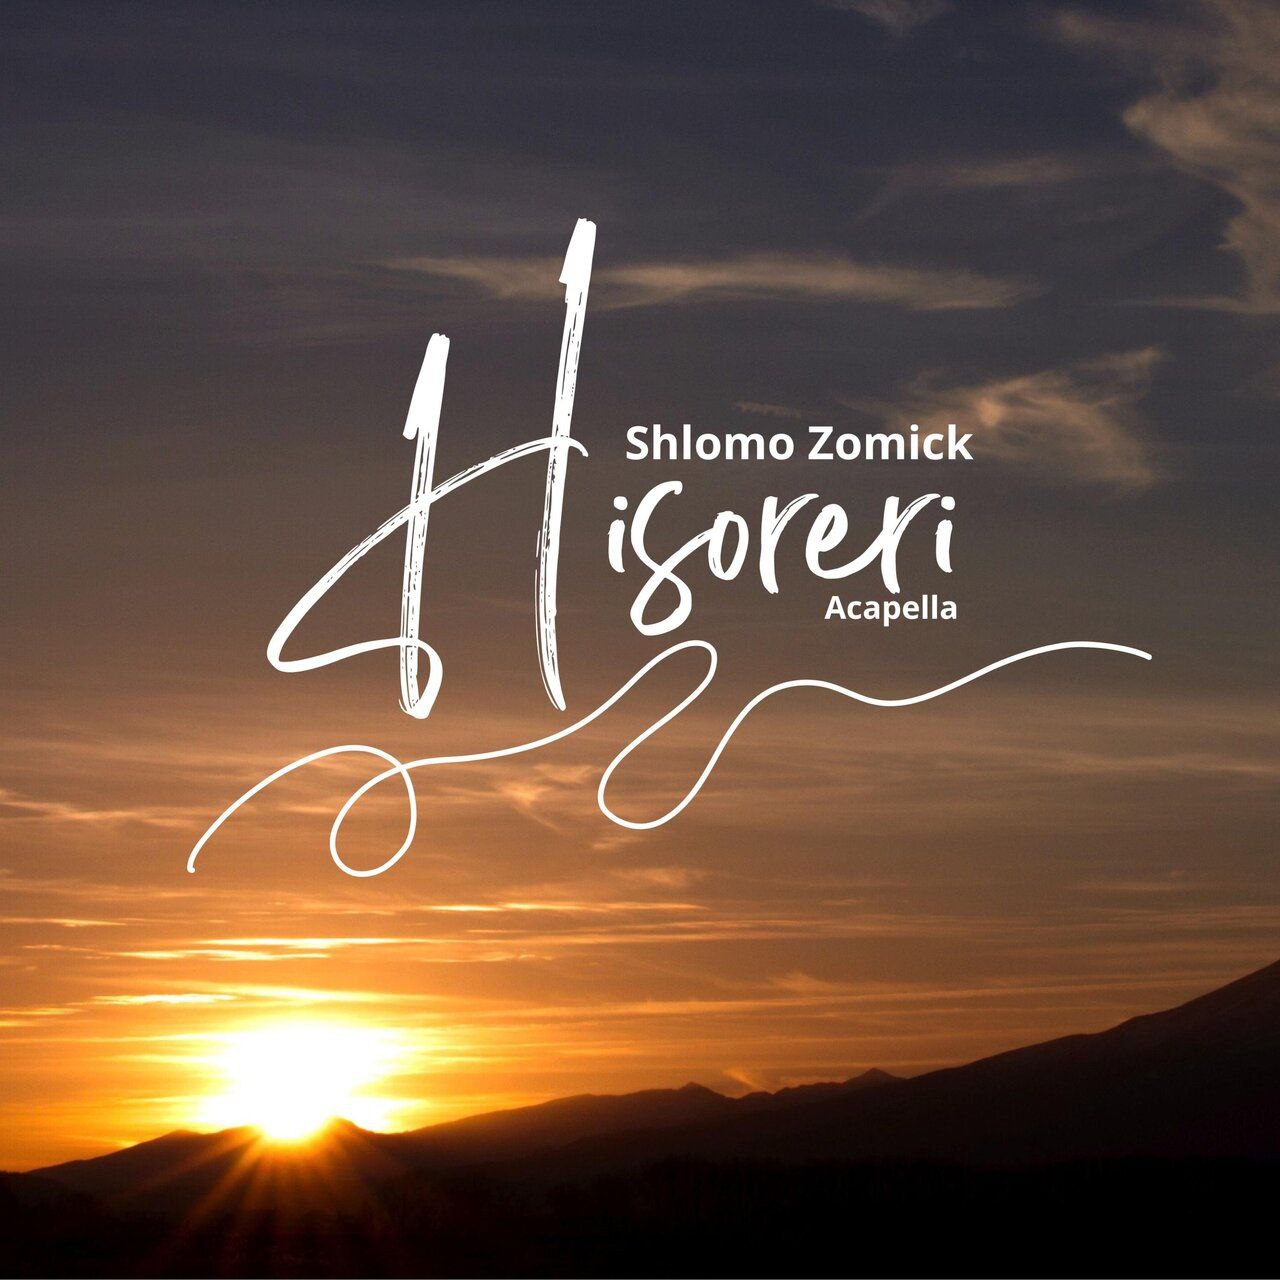 Shlomo Zomick - Hisoreri [Acapella] (Single)